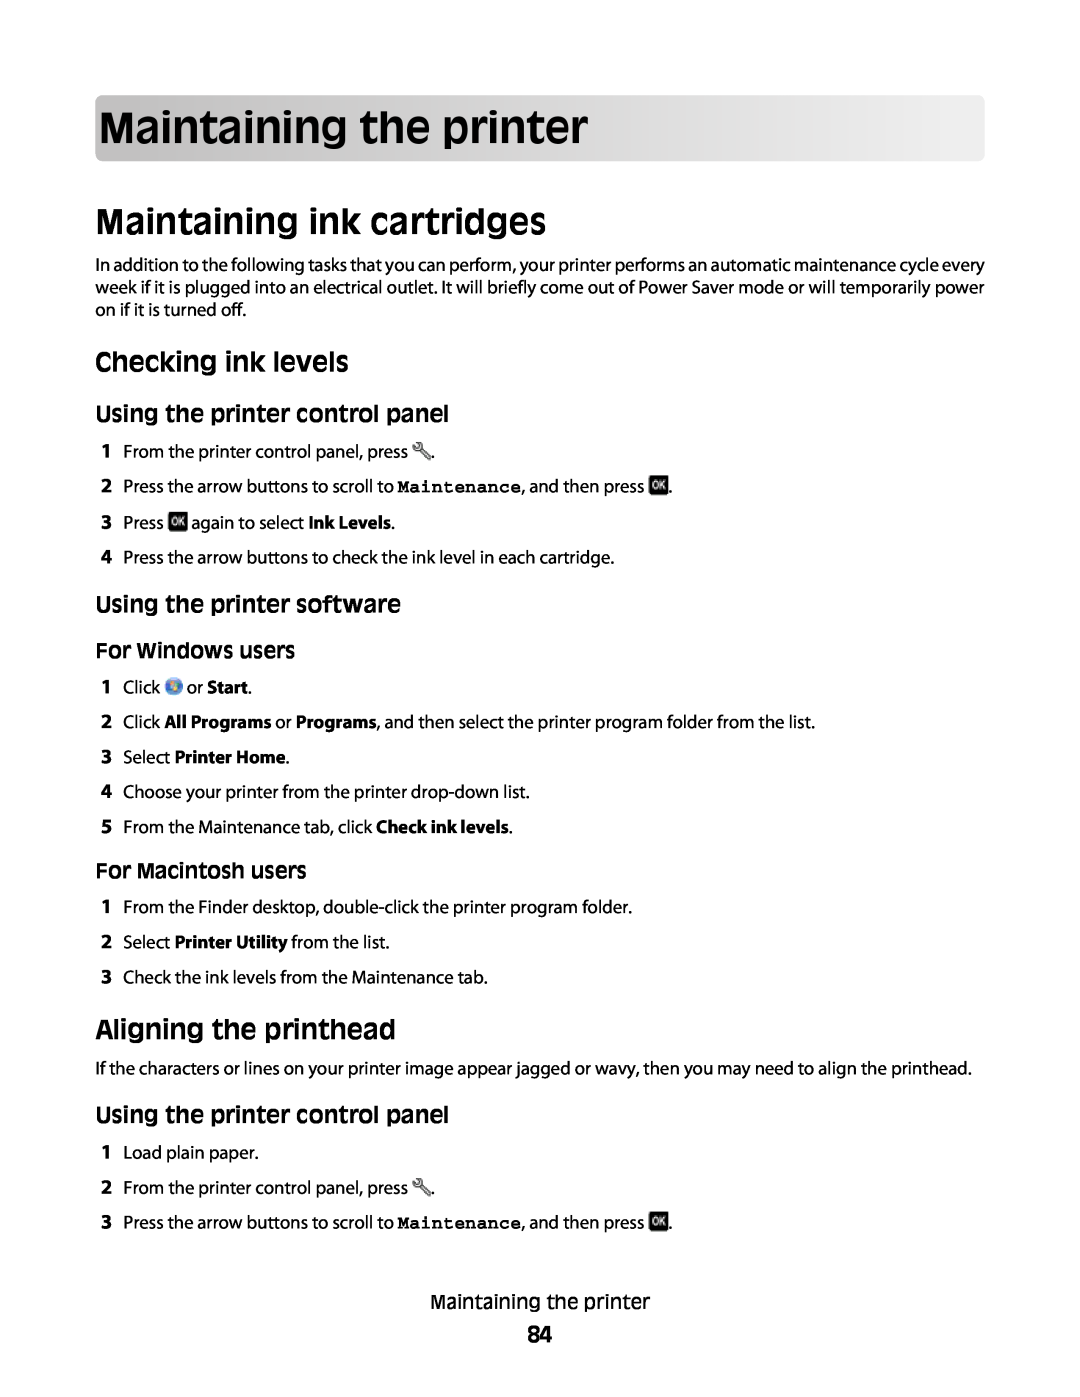 Lexmark 101, 10E manual Maintainingtheprinter, Maintaining ink cartridges, Checking ink levels, Aligning the printhead 